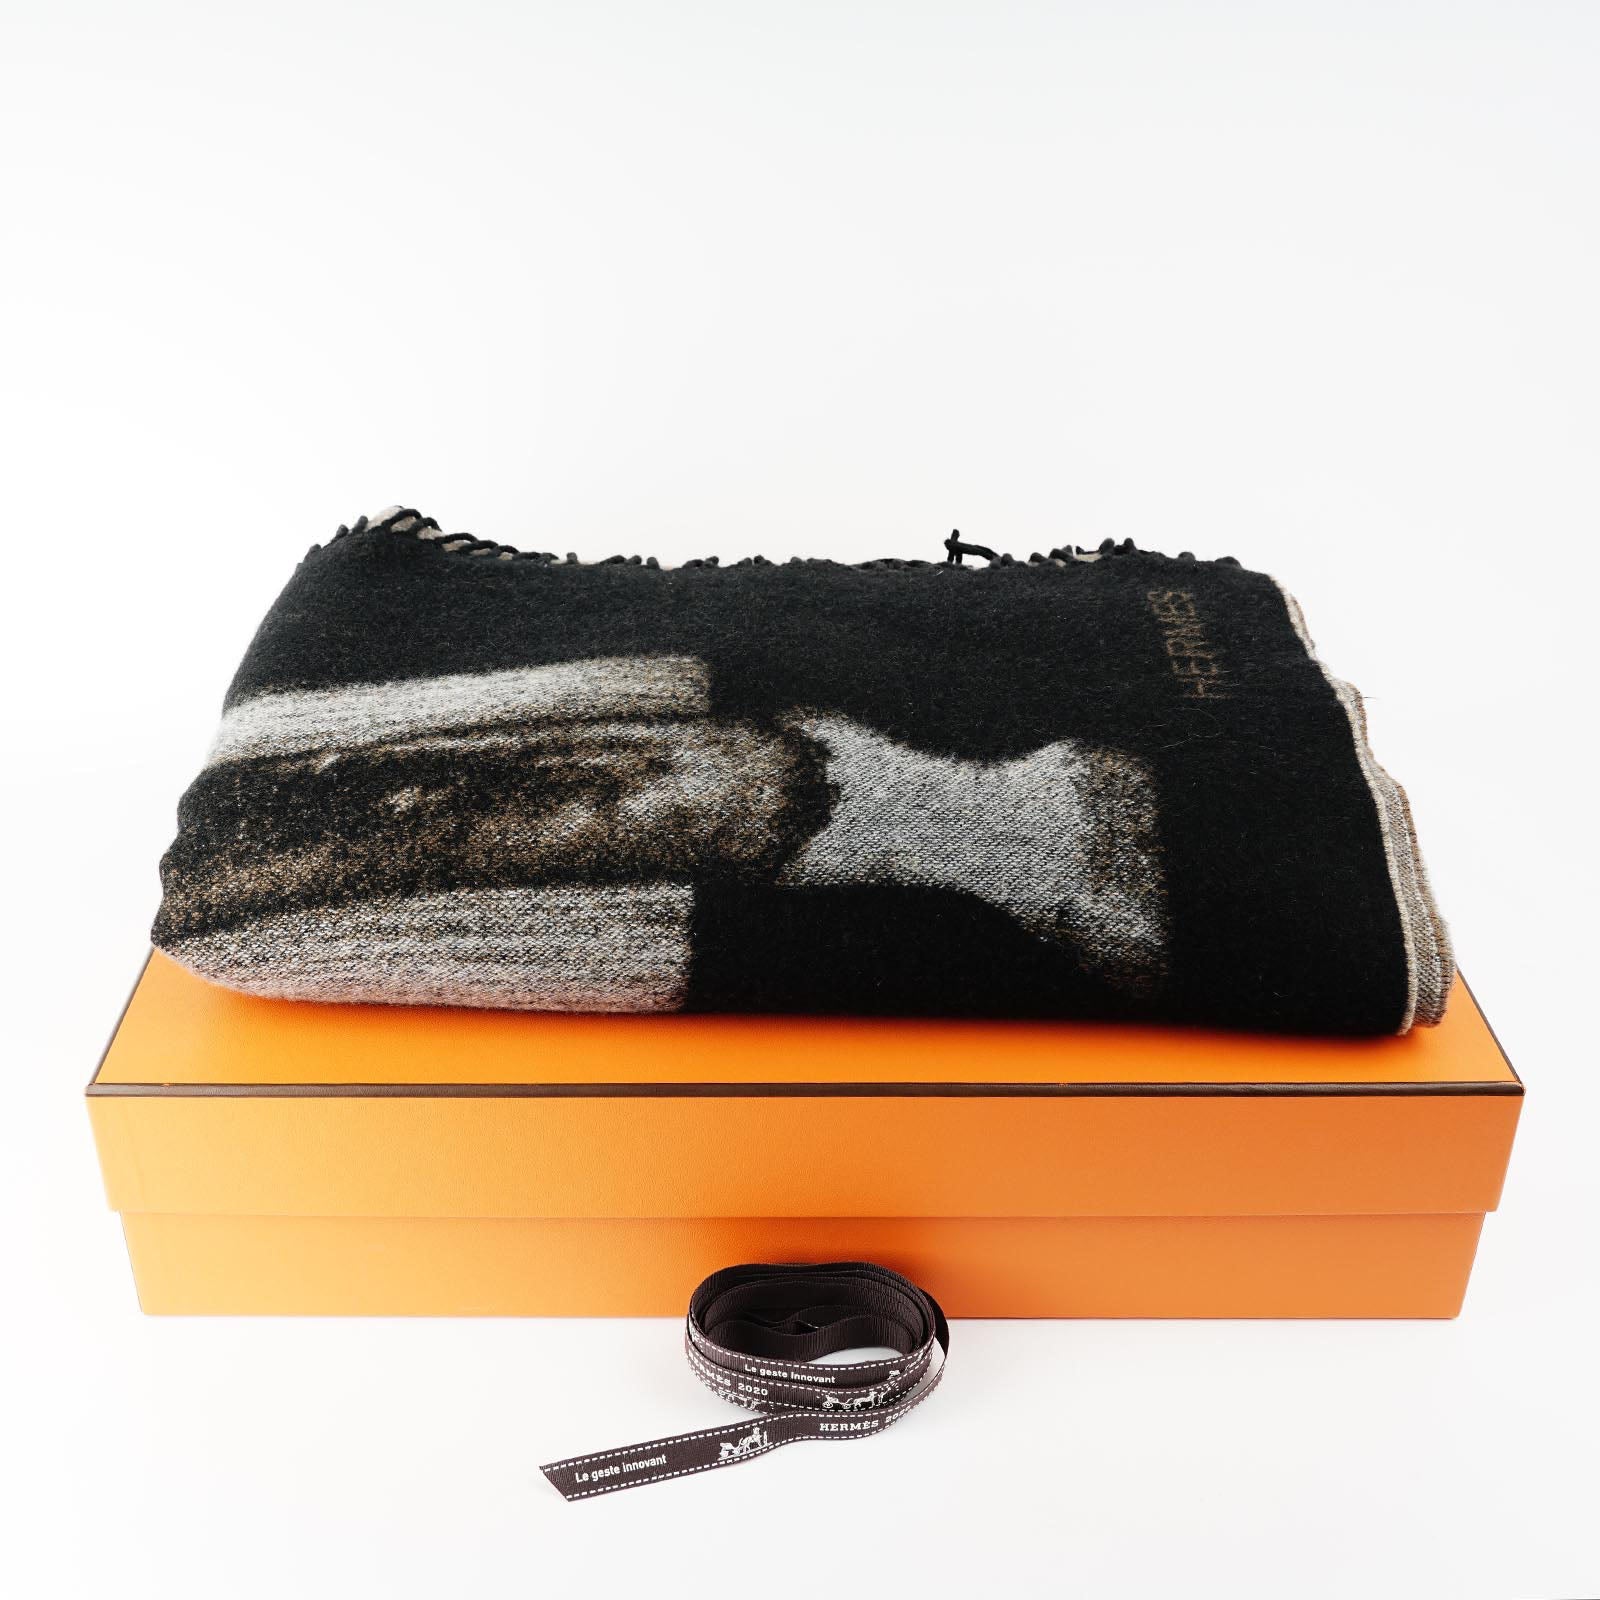 Cheval Palomino Alezan Cashmere Blanket - HERMÈS - Affordable Luxury image